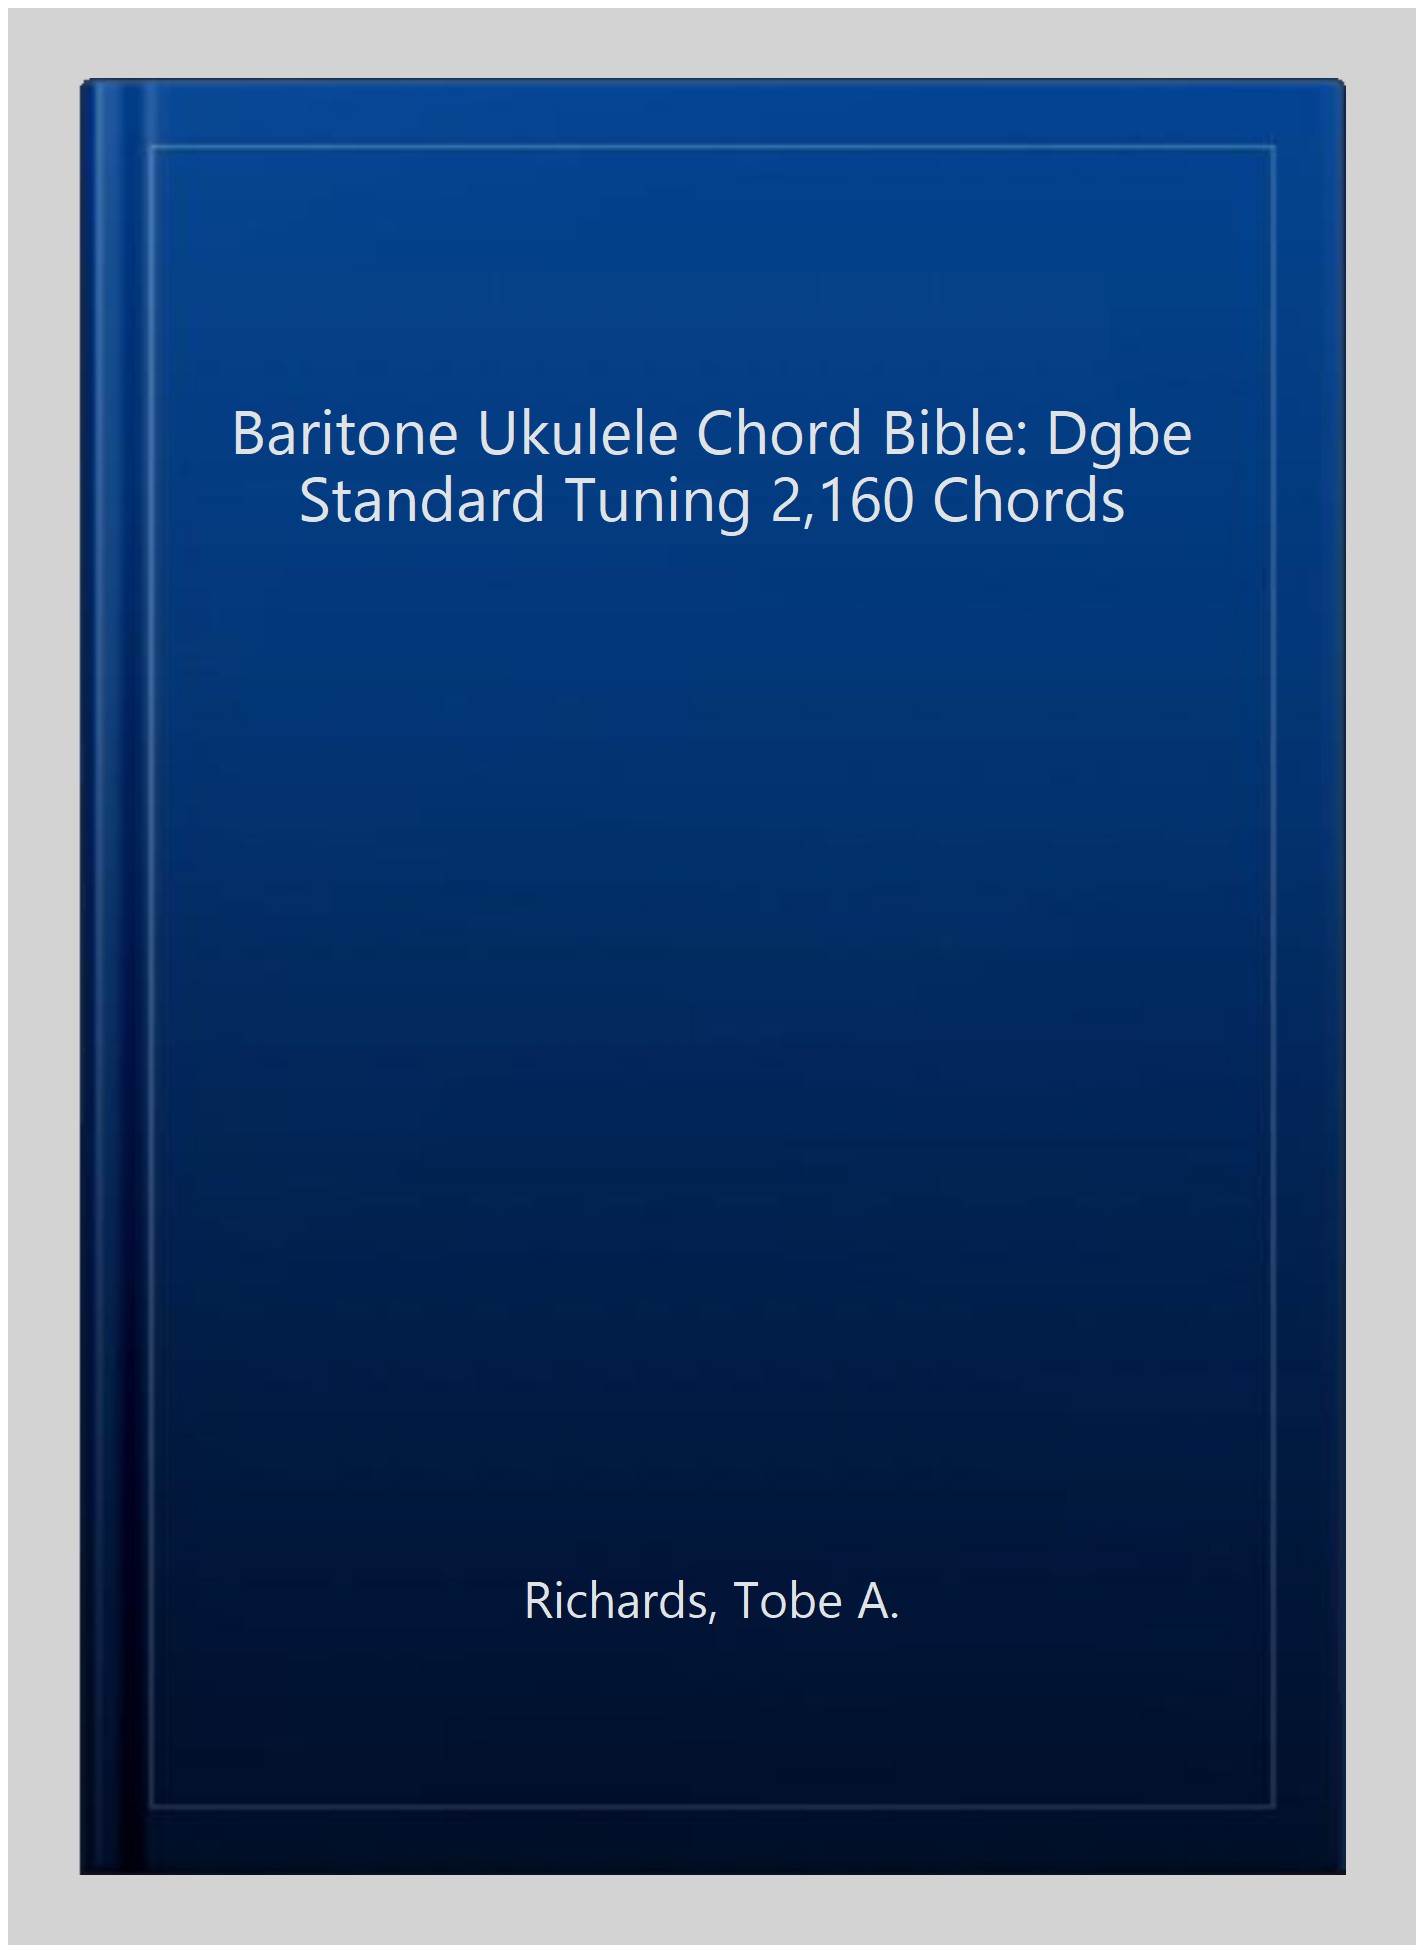 Baritone Ukulele Chord Bible: Dgbe Standard Tuning 2,160 Chords, Paperback by... 9781906207311 eBay